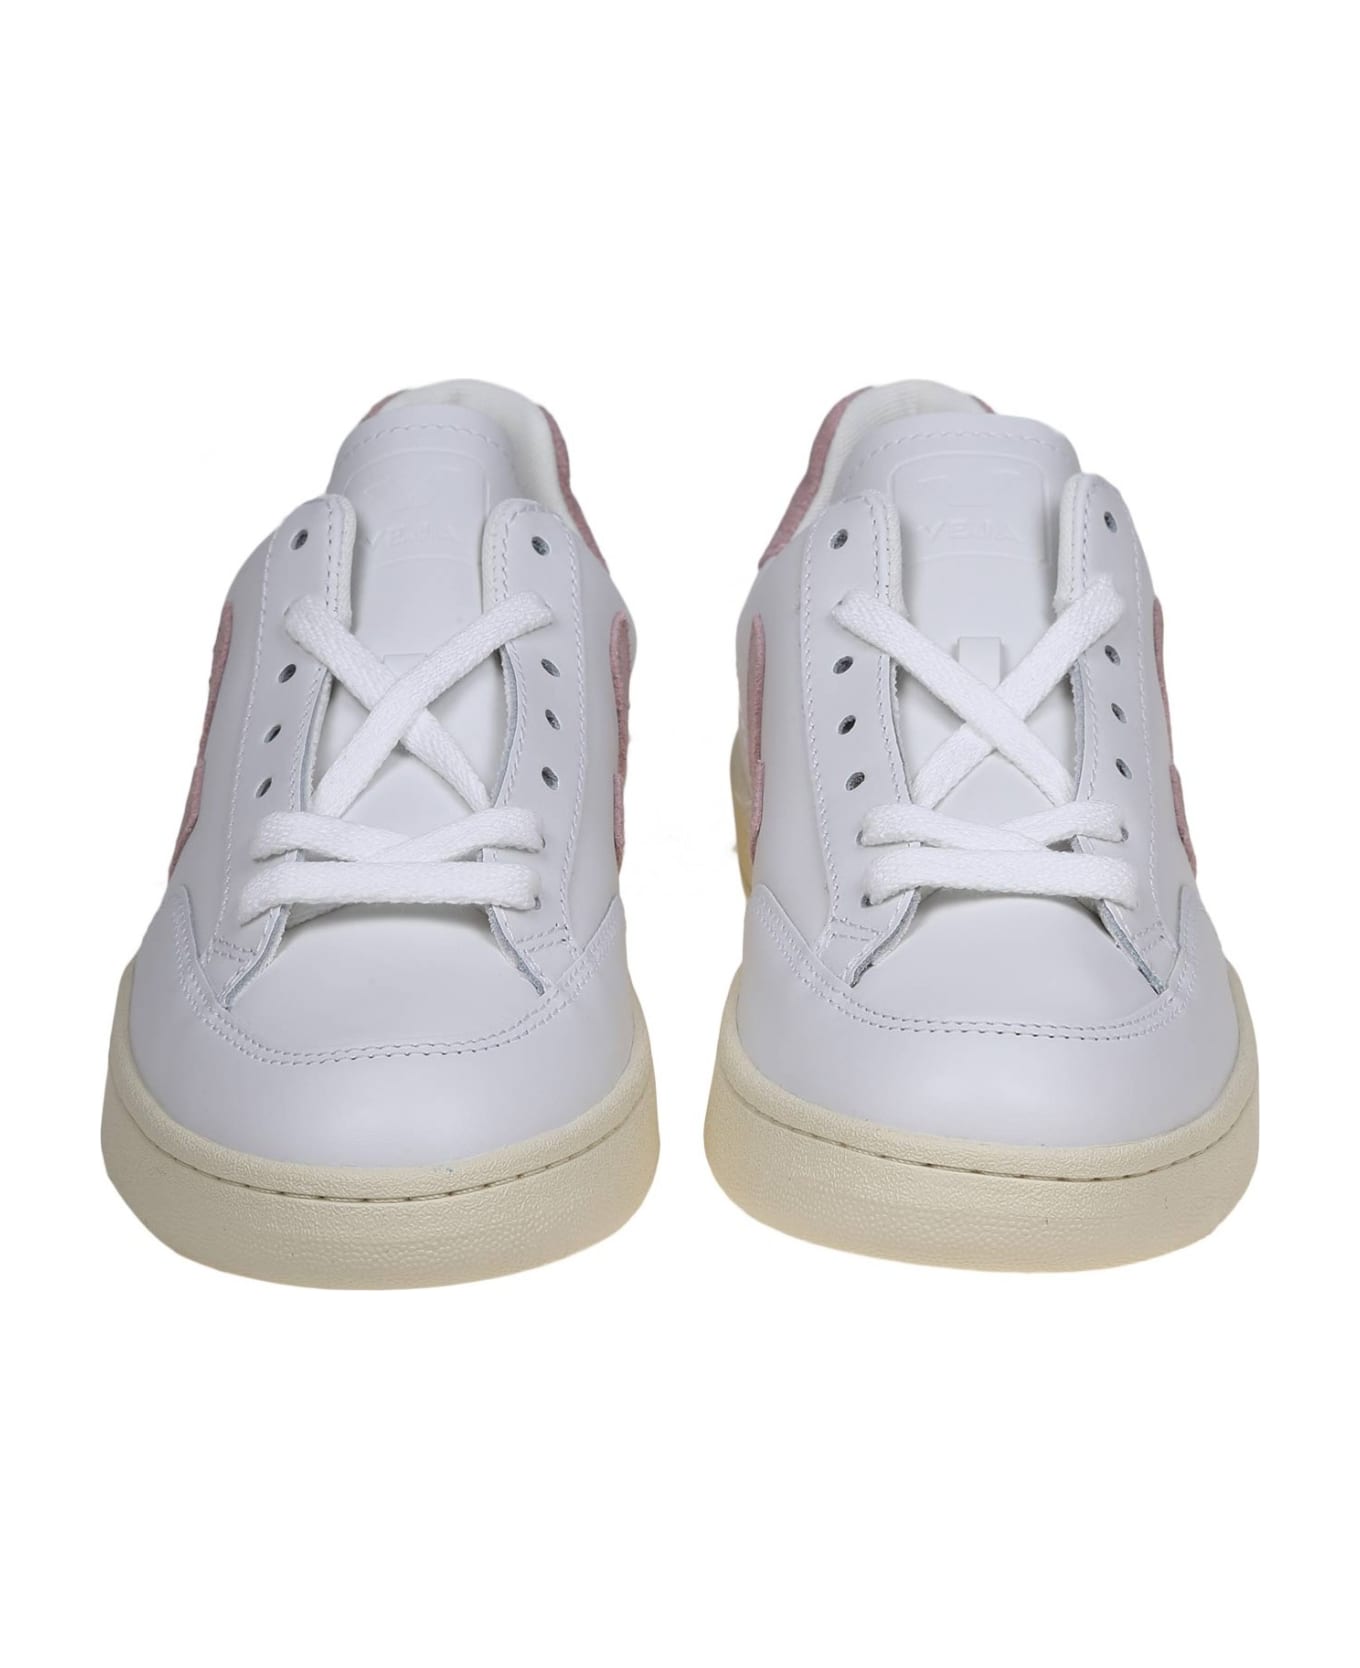 Veja V 12 Sneakers In White/pink Leather - White/Rose